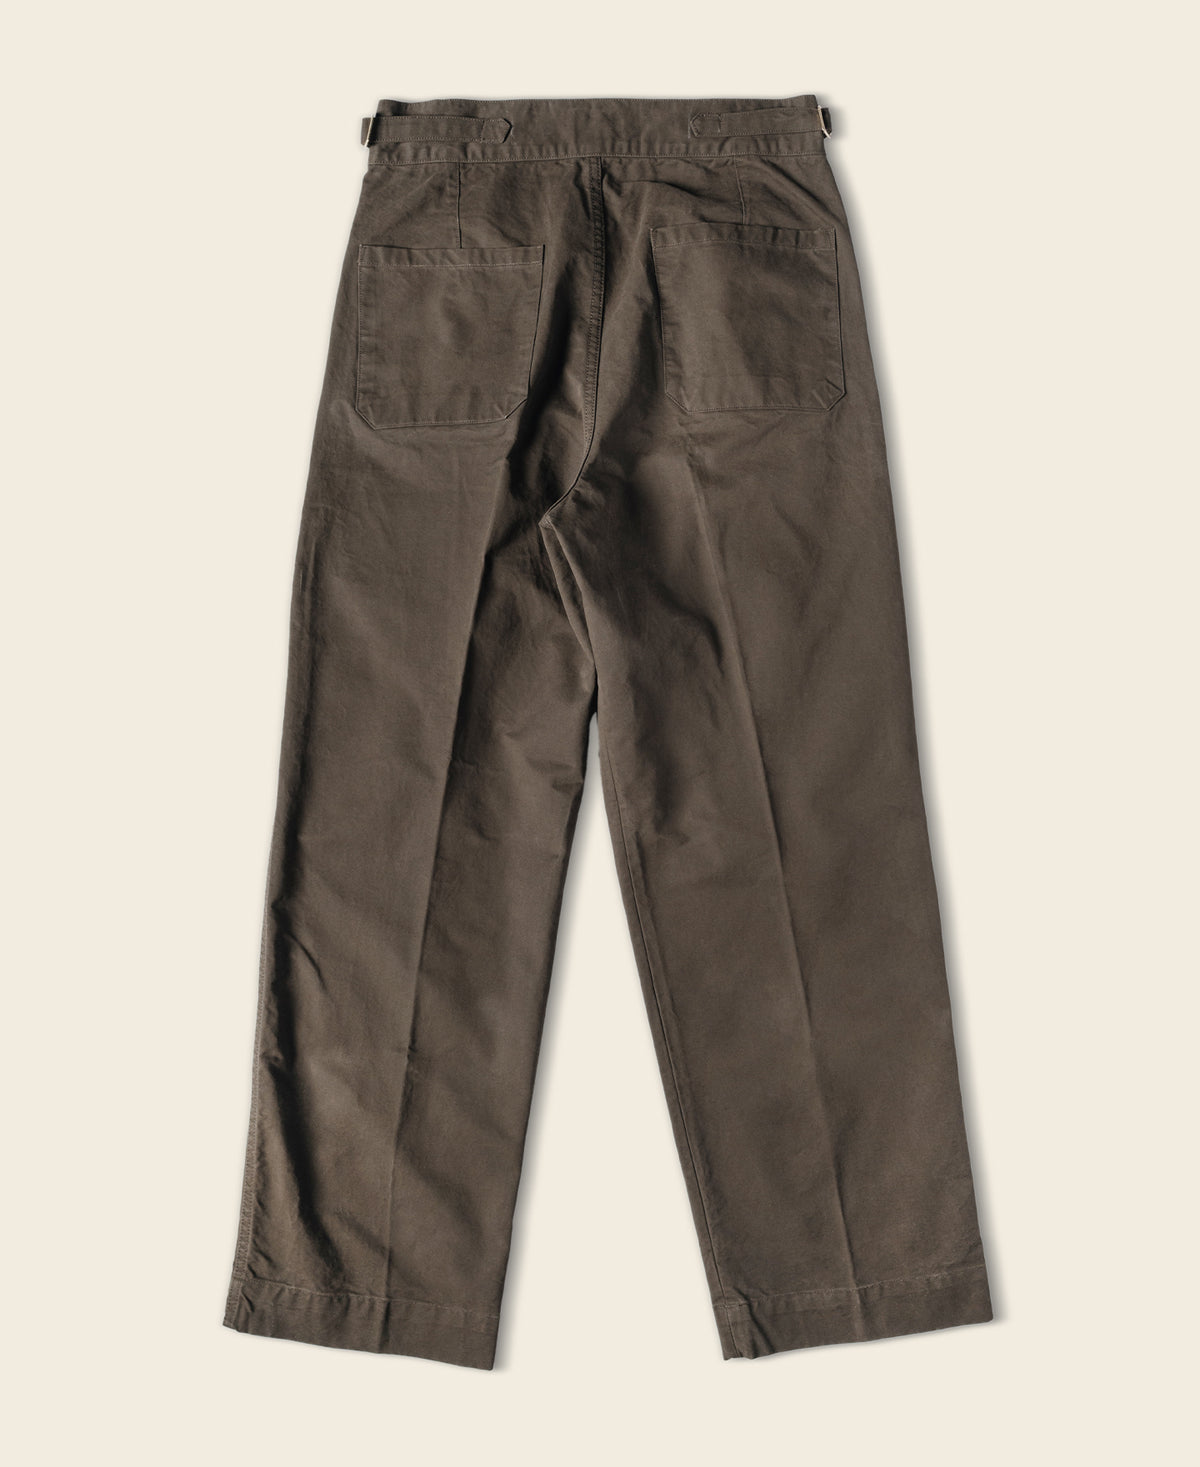 1960s AUS Army Combat Pants - Brown